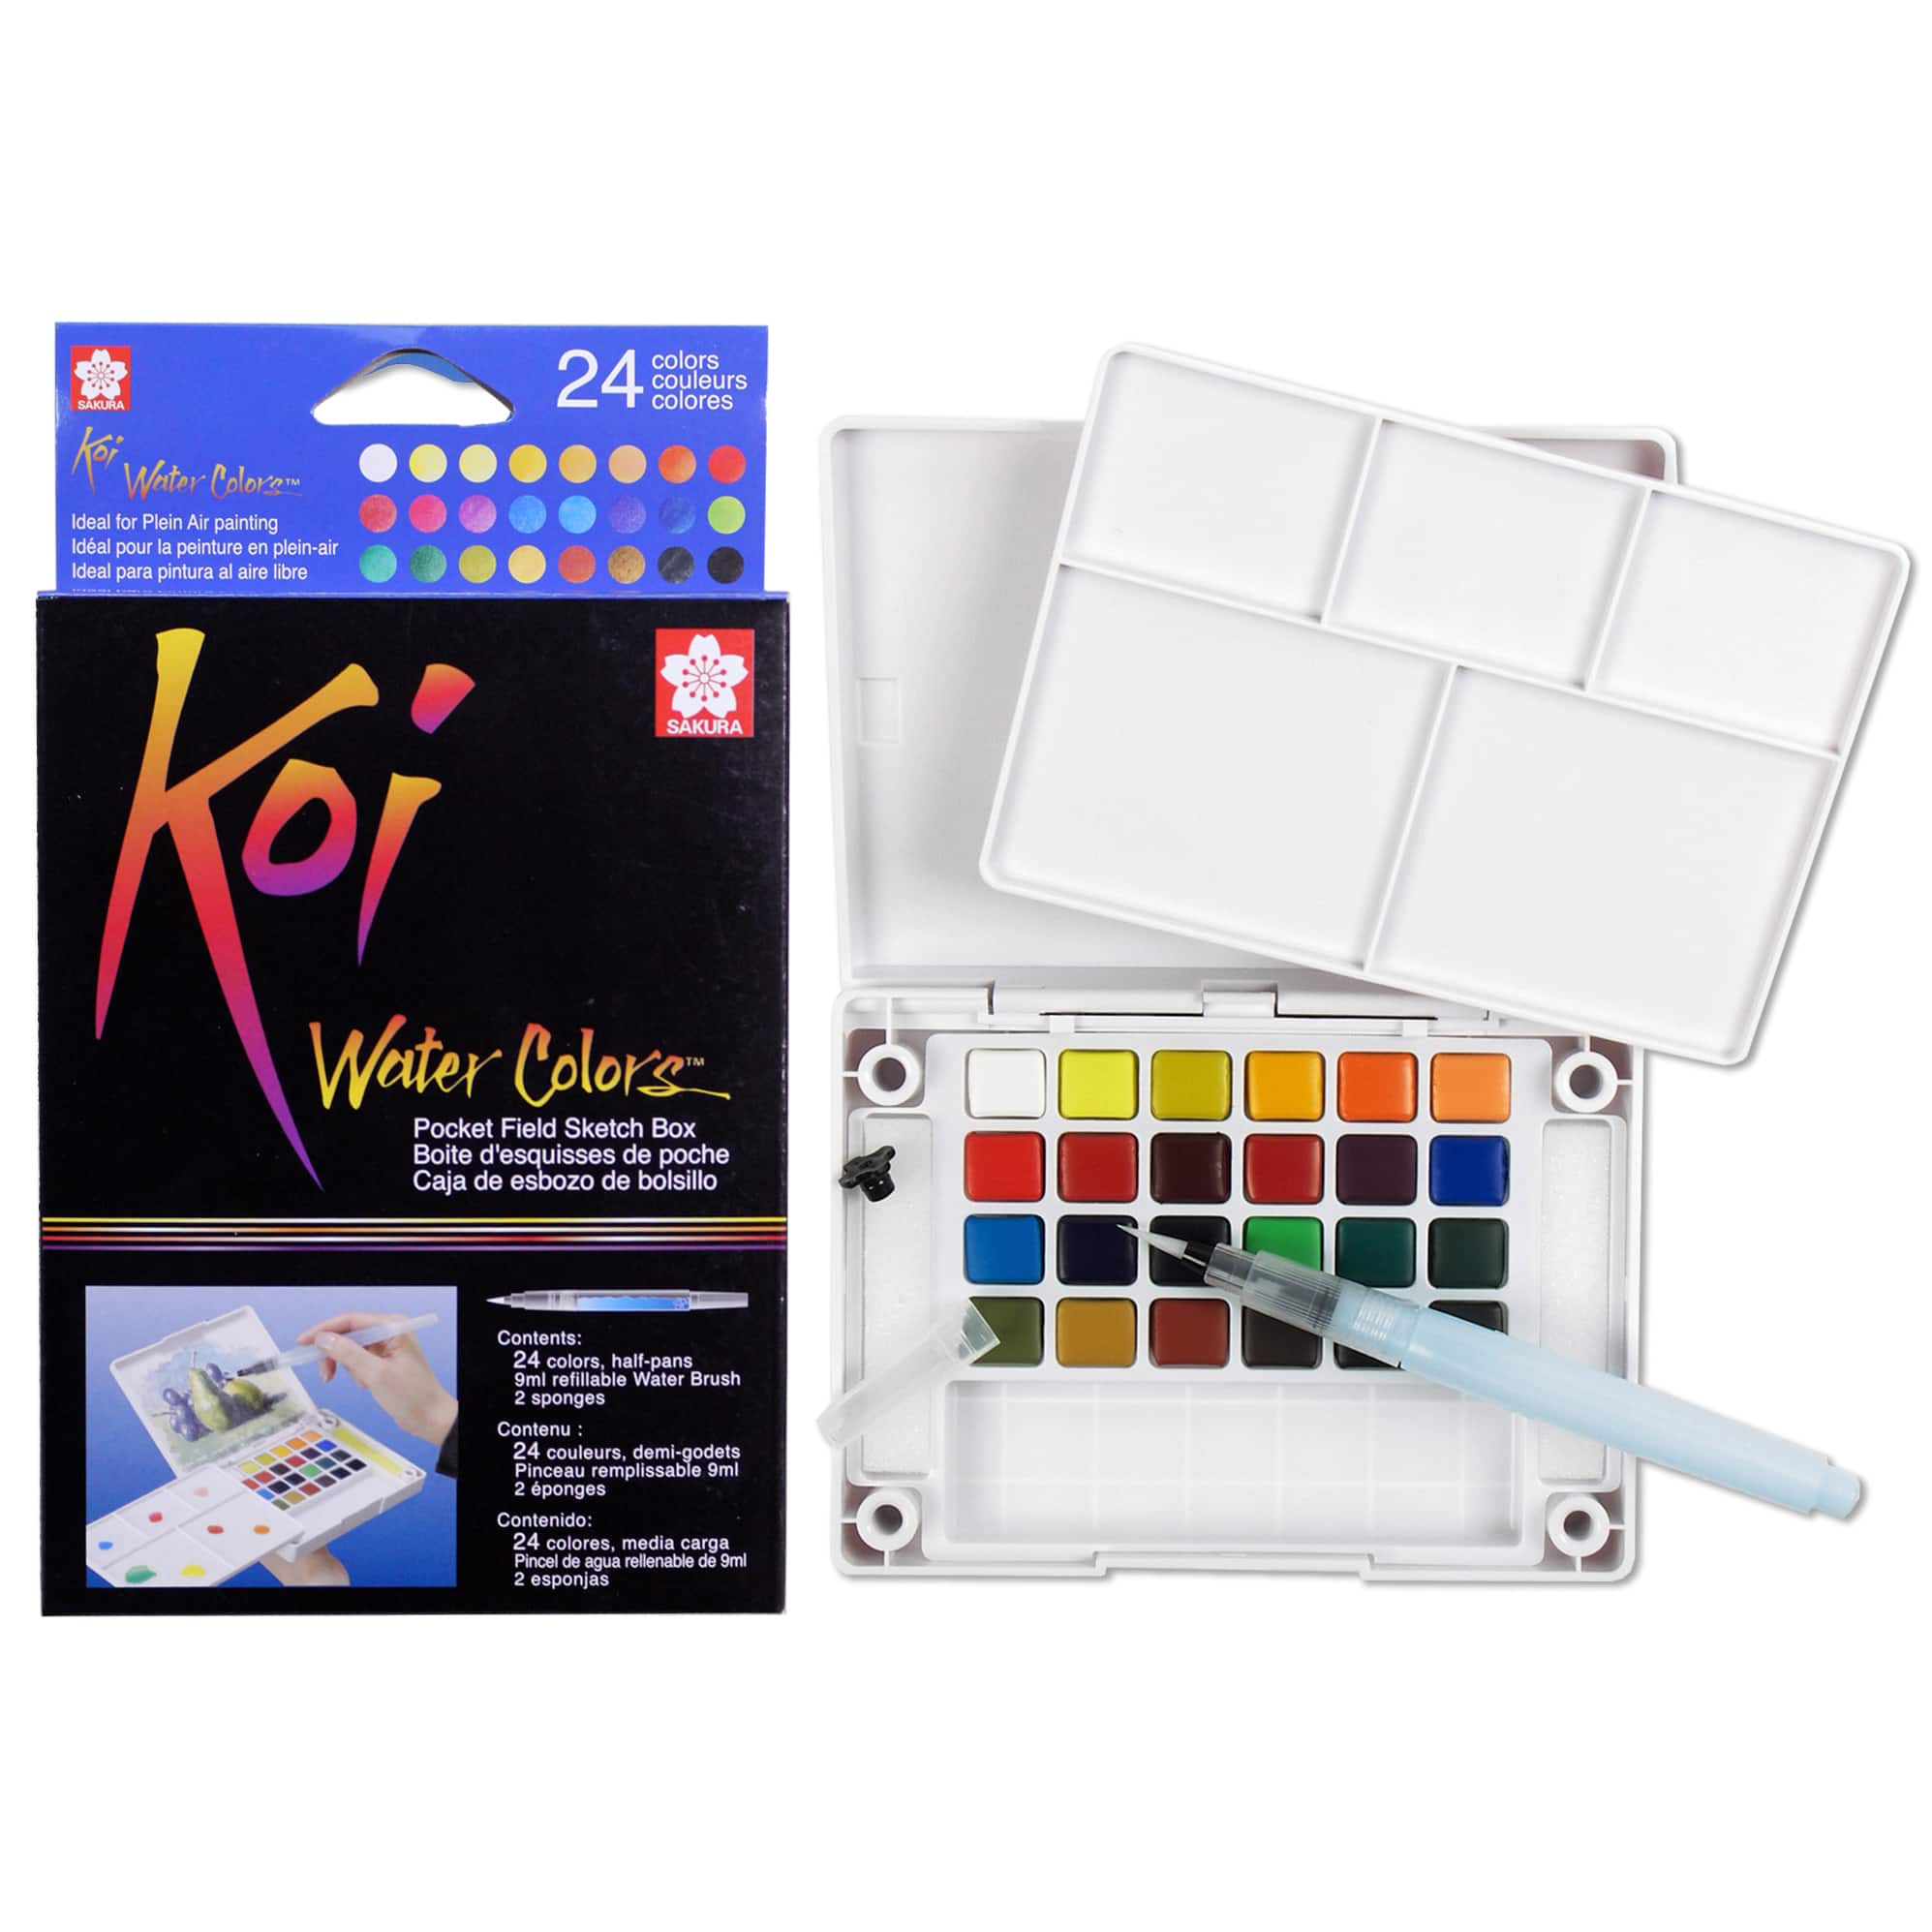 Koi Water Colors Pocket Field Sketch 72col